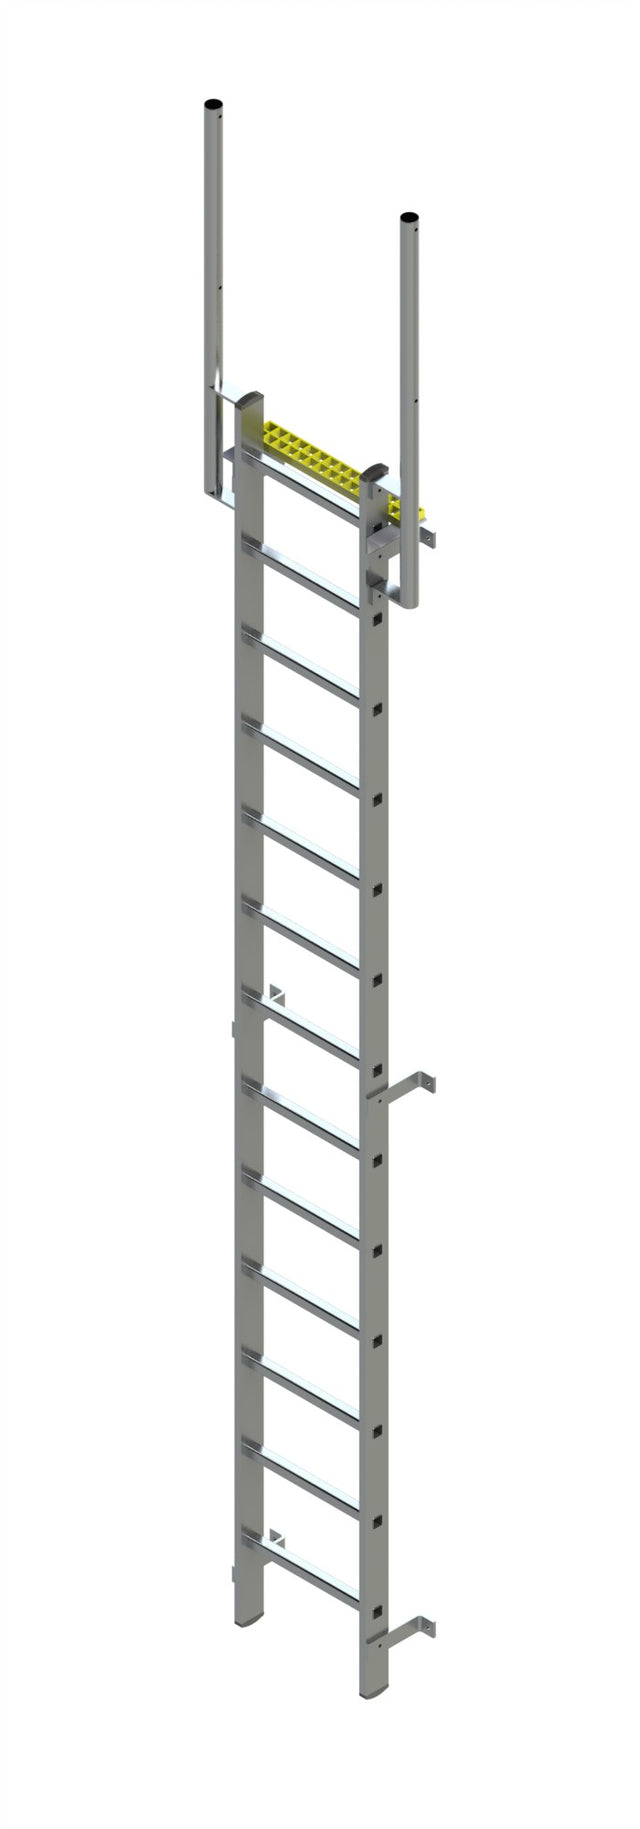 Fixed Vertical Ladder with Walkthrough 1.2 - 2 m